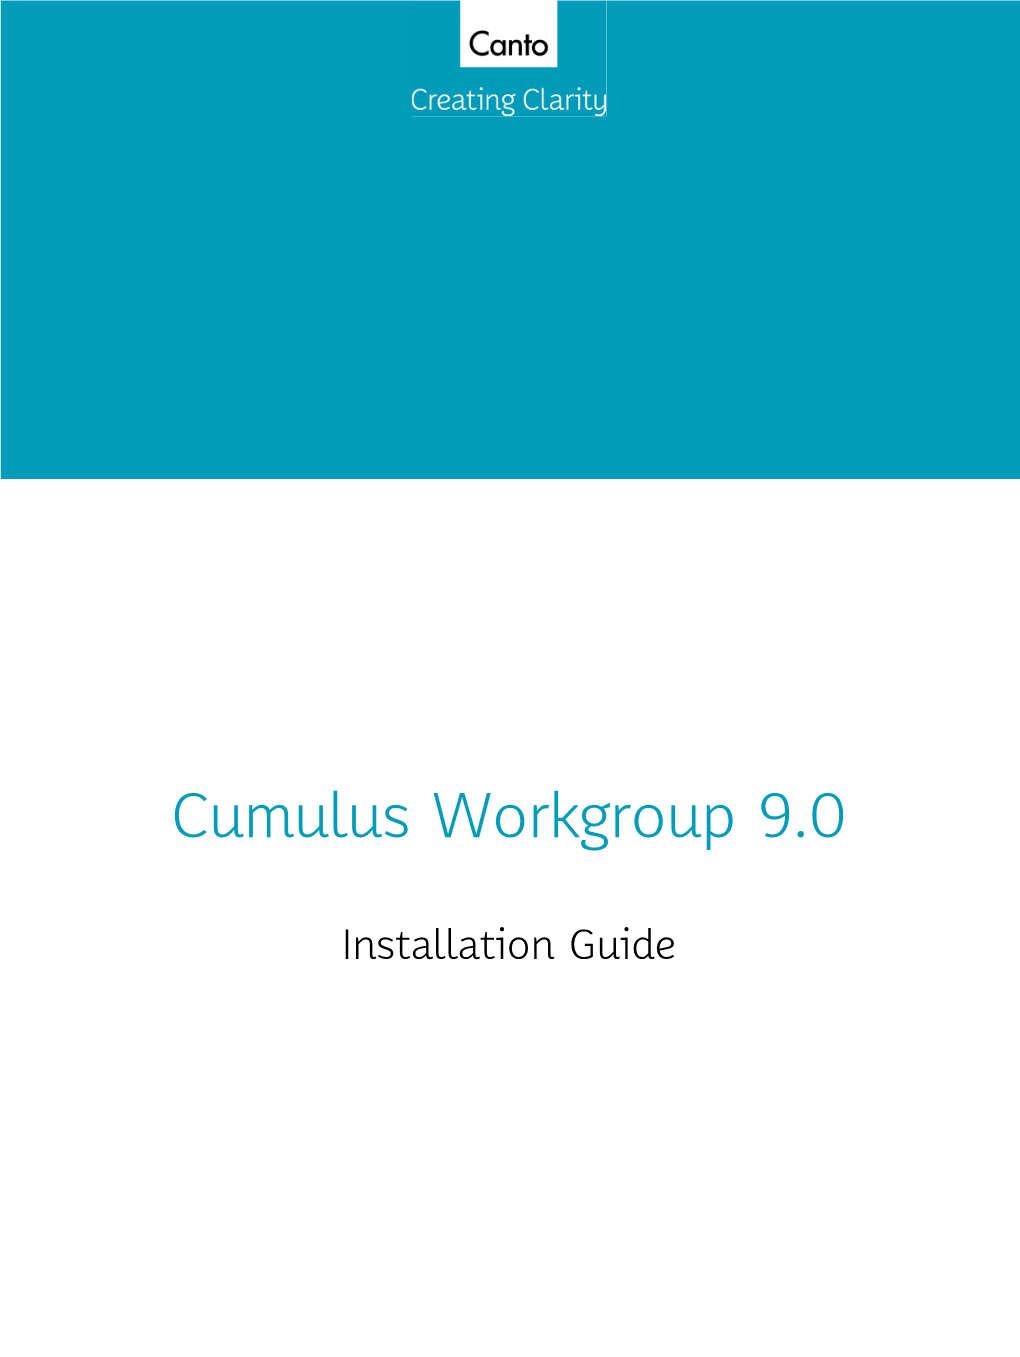 Cumulus Workgroup 9.0